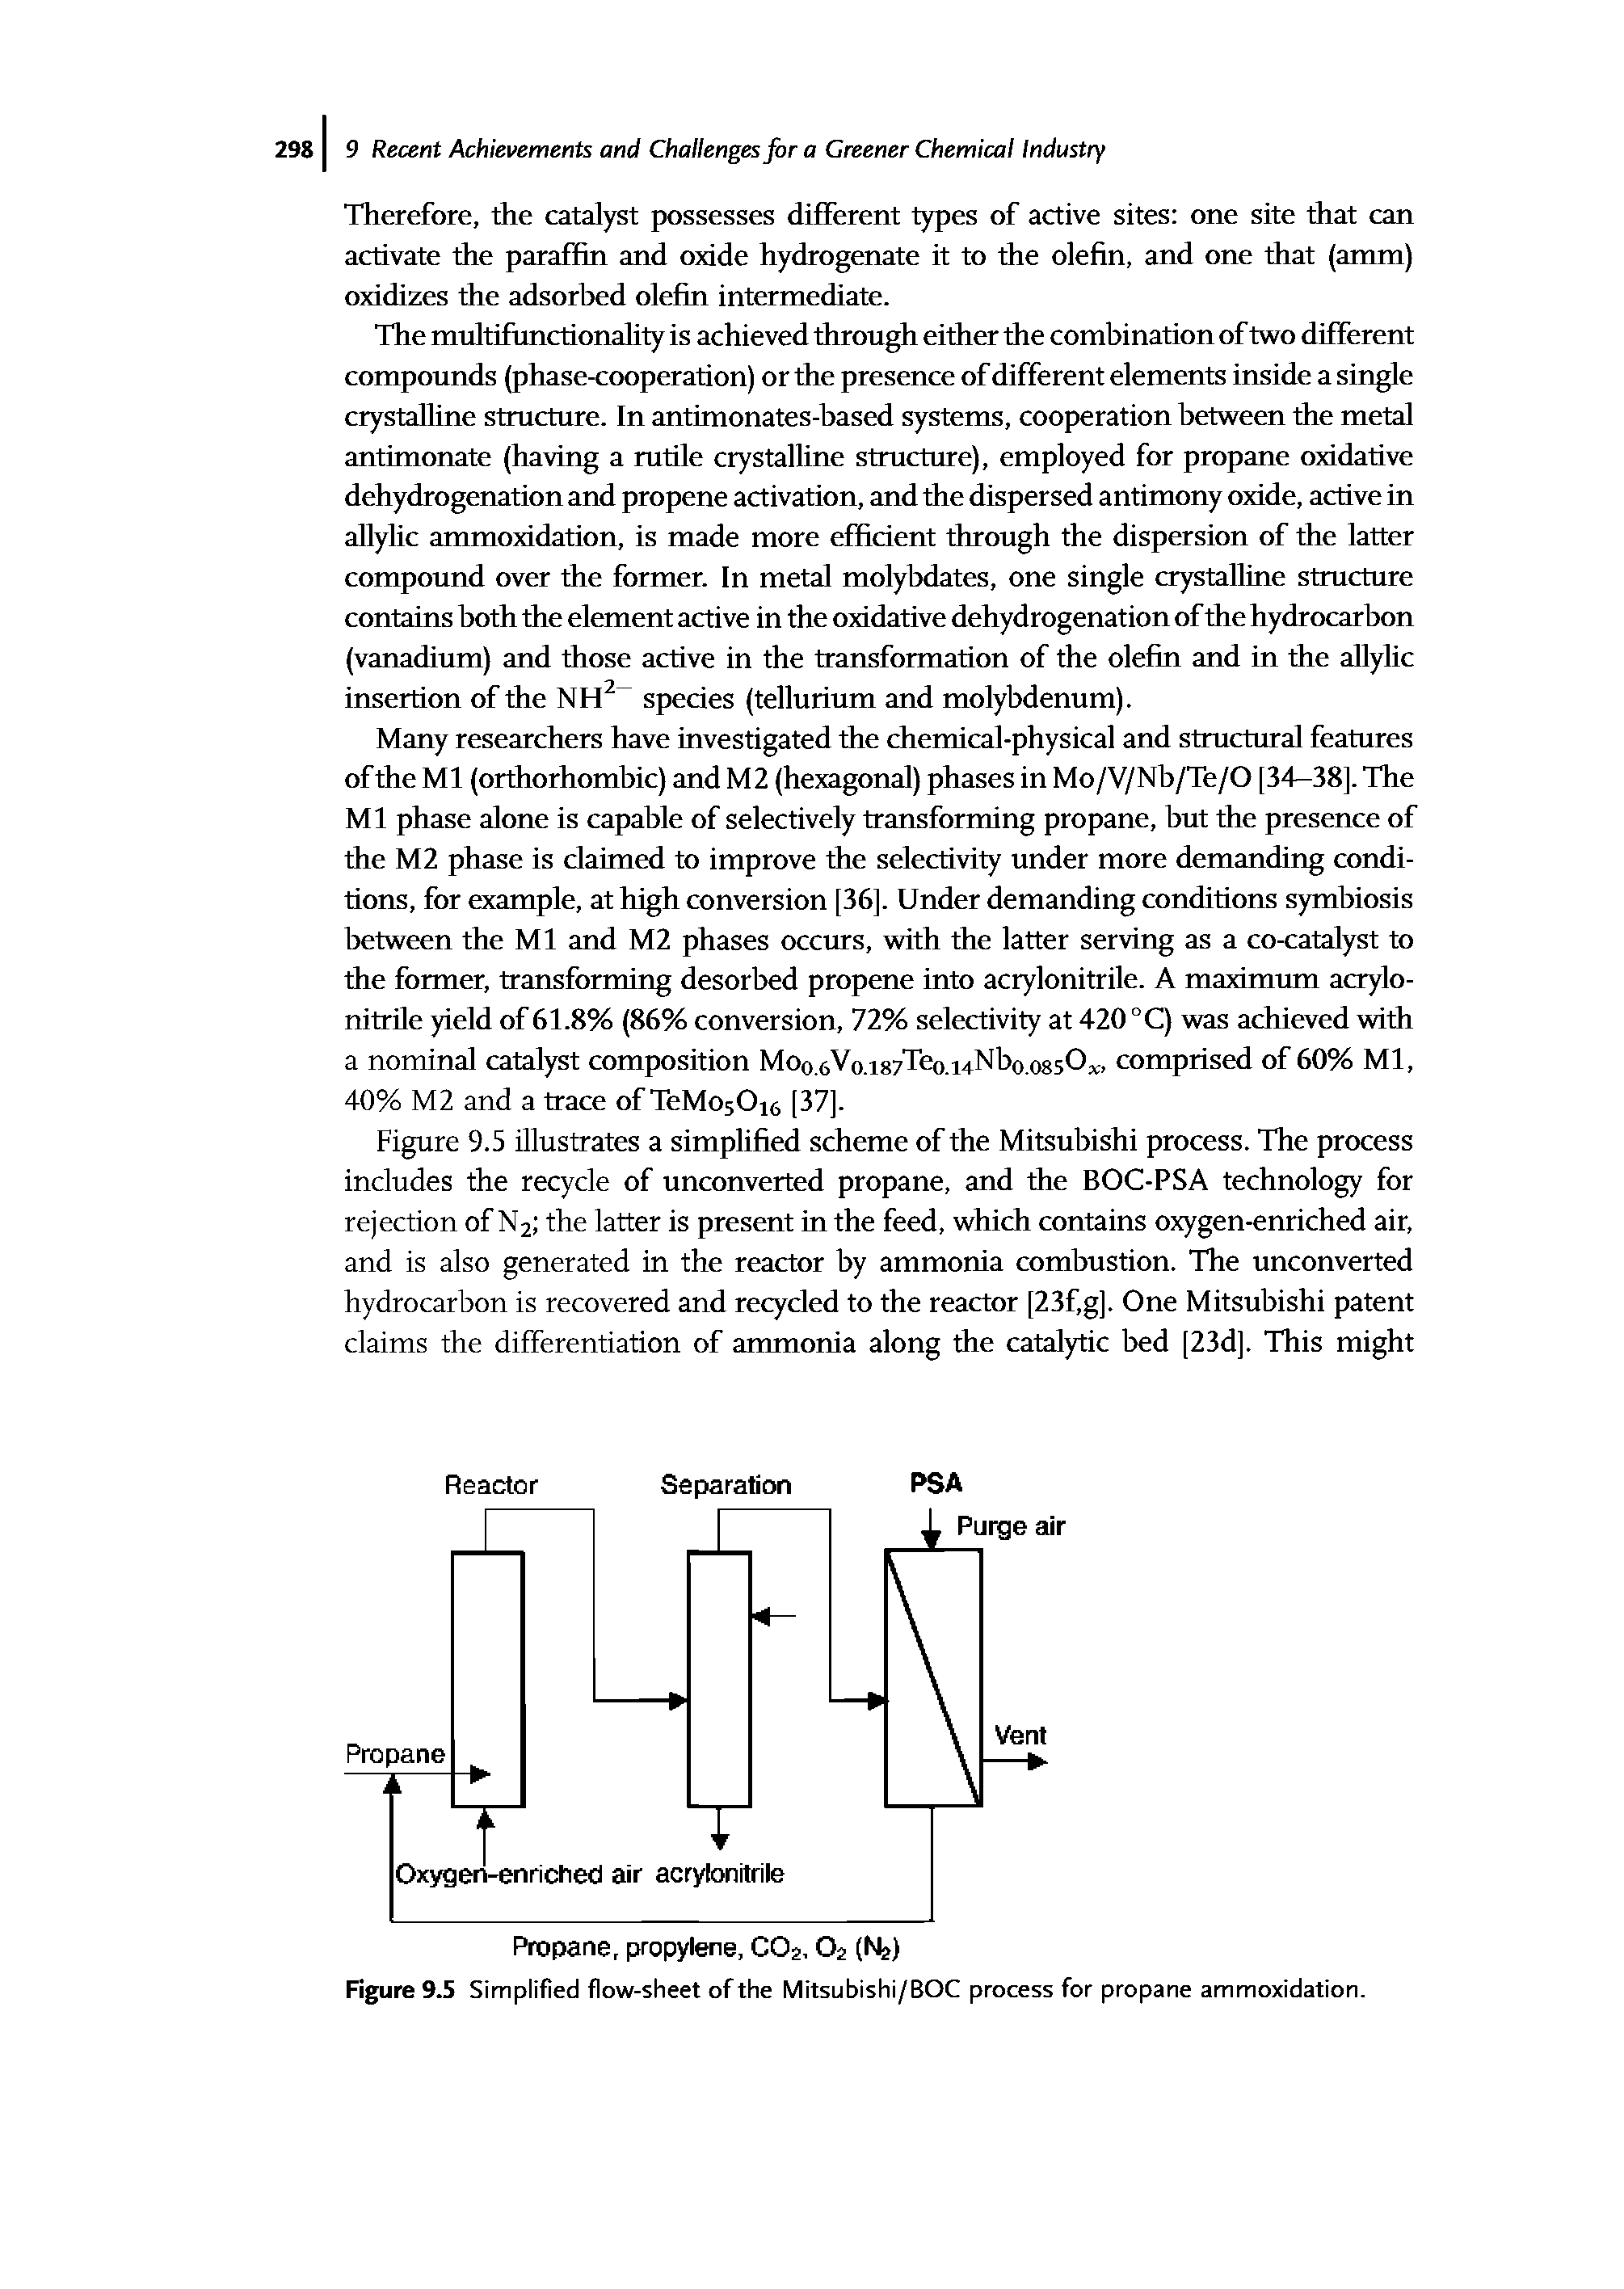 Figure 9.5 Simplified flow-sheet of the Mitsubishi/BOC process for propane ammoxidation.